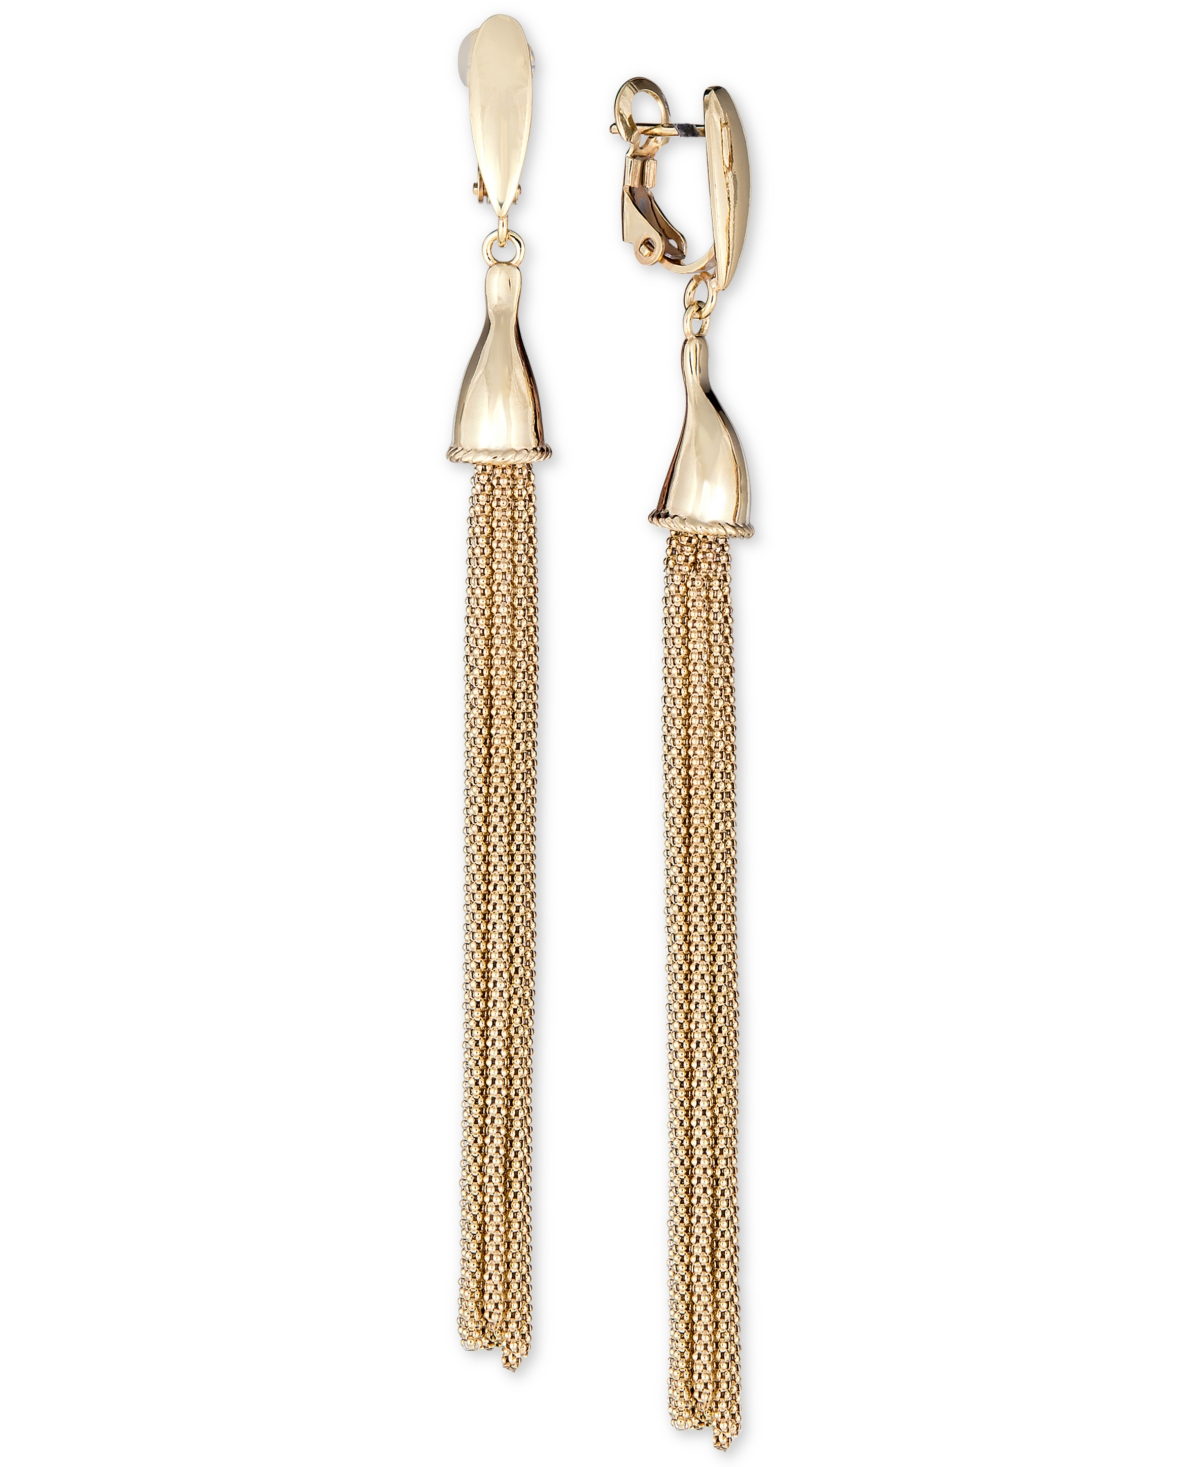 Tassel Drop Earrings in 14k Gold-Plated Sterling Silver - Gold Over Silver